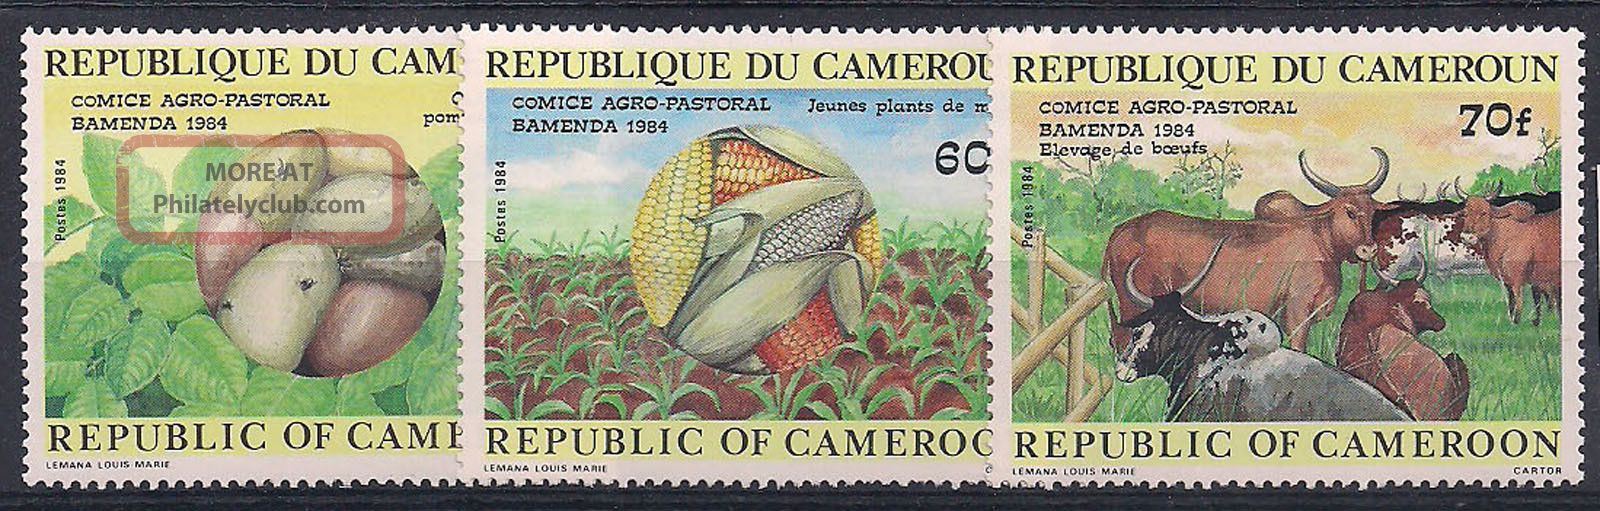 Cameroon - 1984 Wildlife - Vf 1066 - 8 Animal Kingdom photo